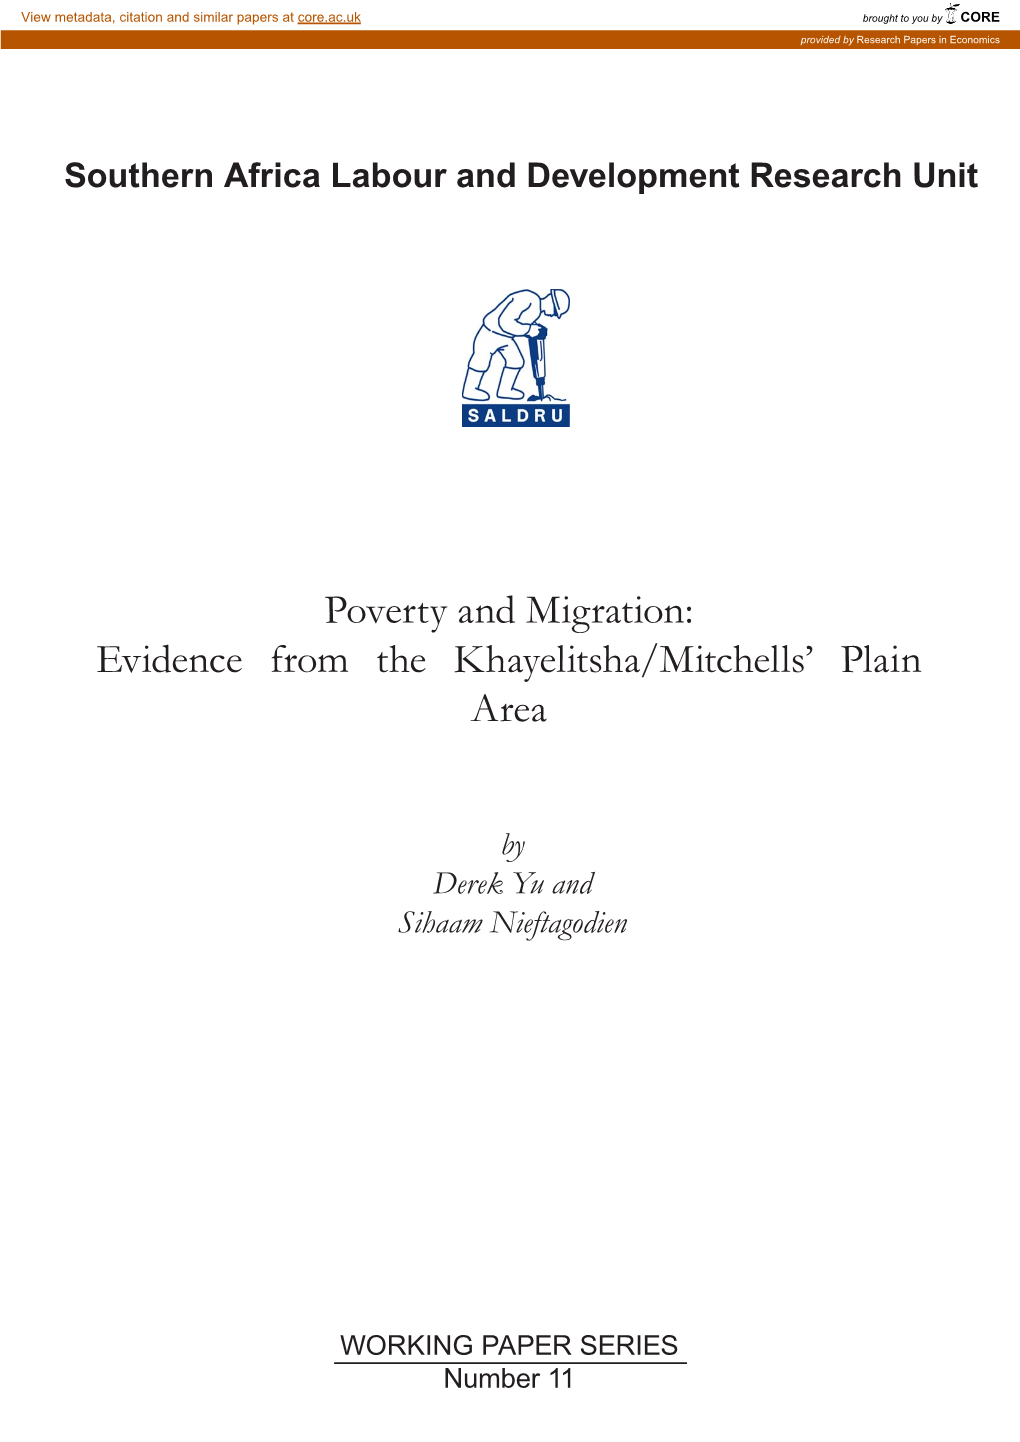 Poverty and Migration: Evidence from the Khayelitsha/Mitchells' Plain Area